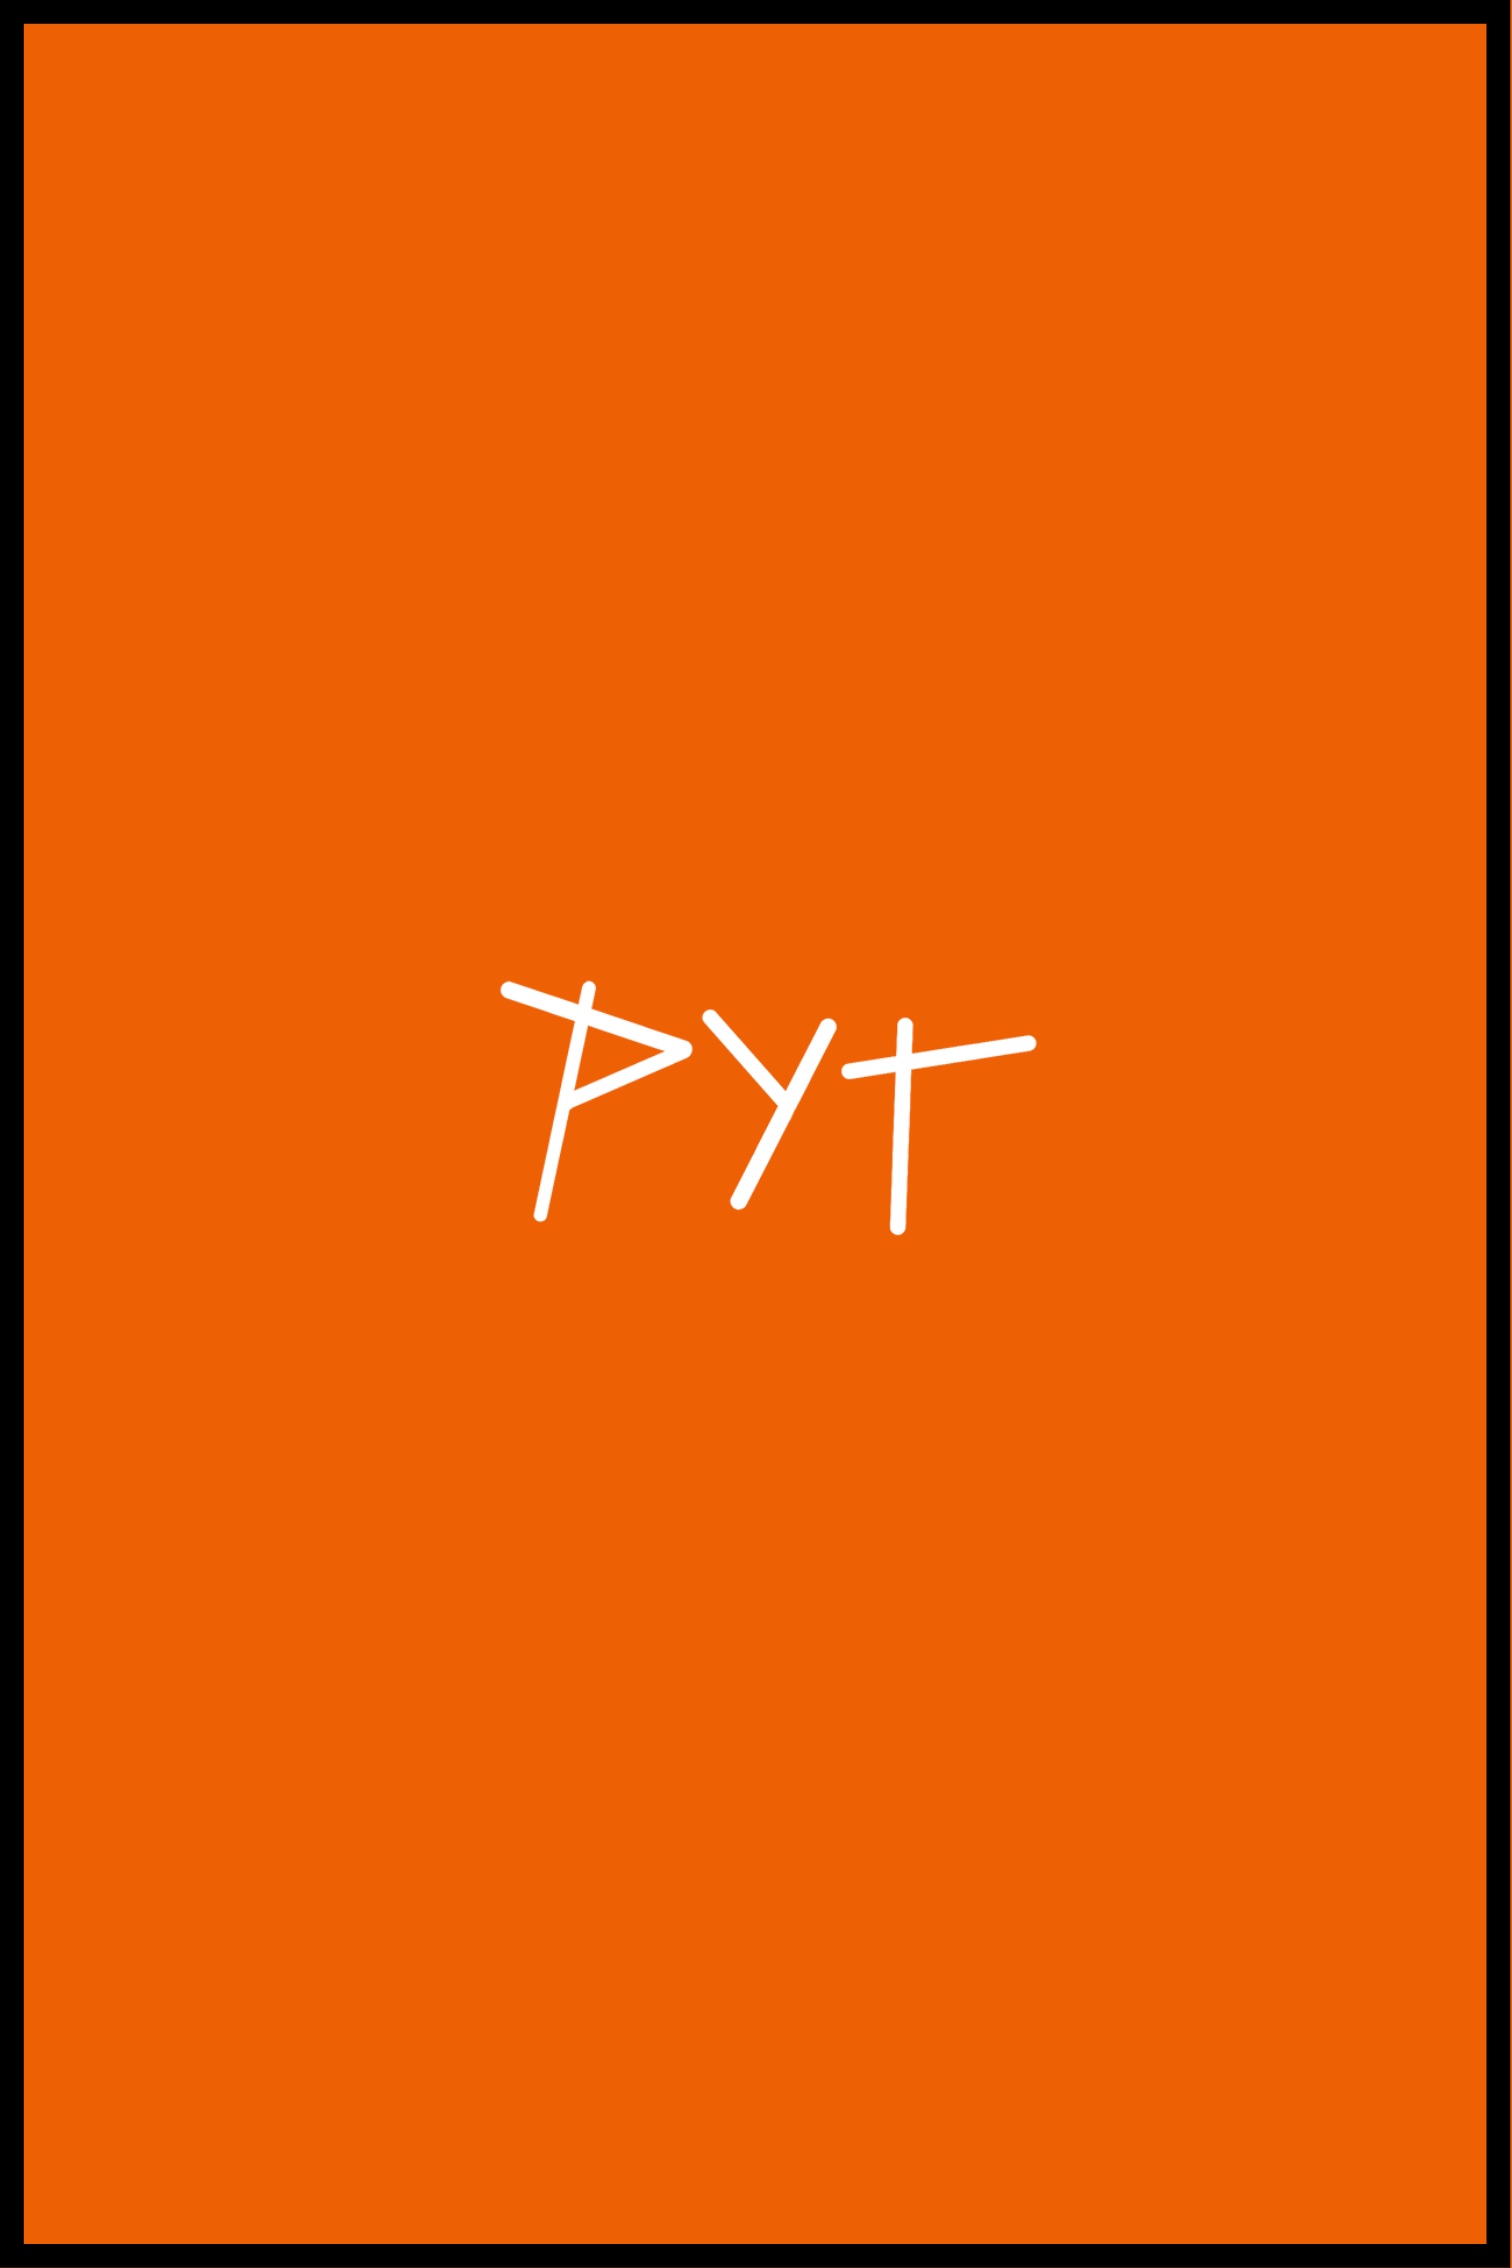 Se pyt-orange plakat - 50x70 cm hos SimplyPoster.dk